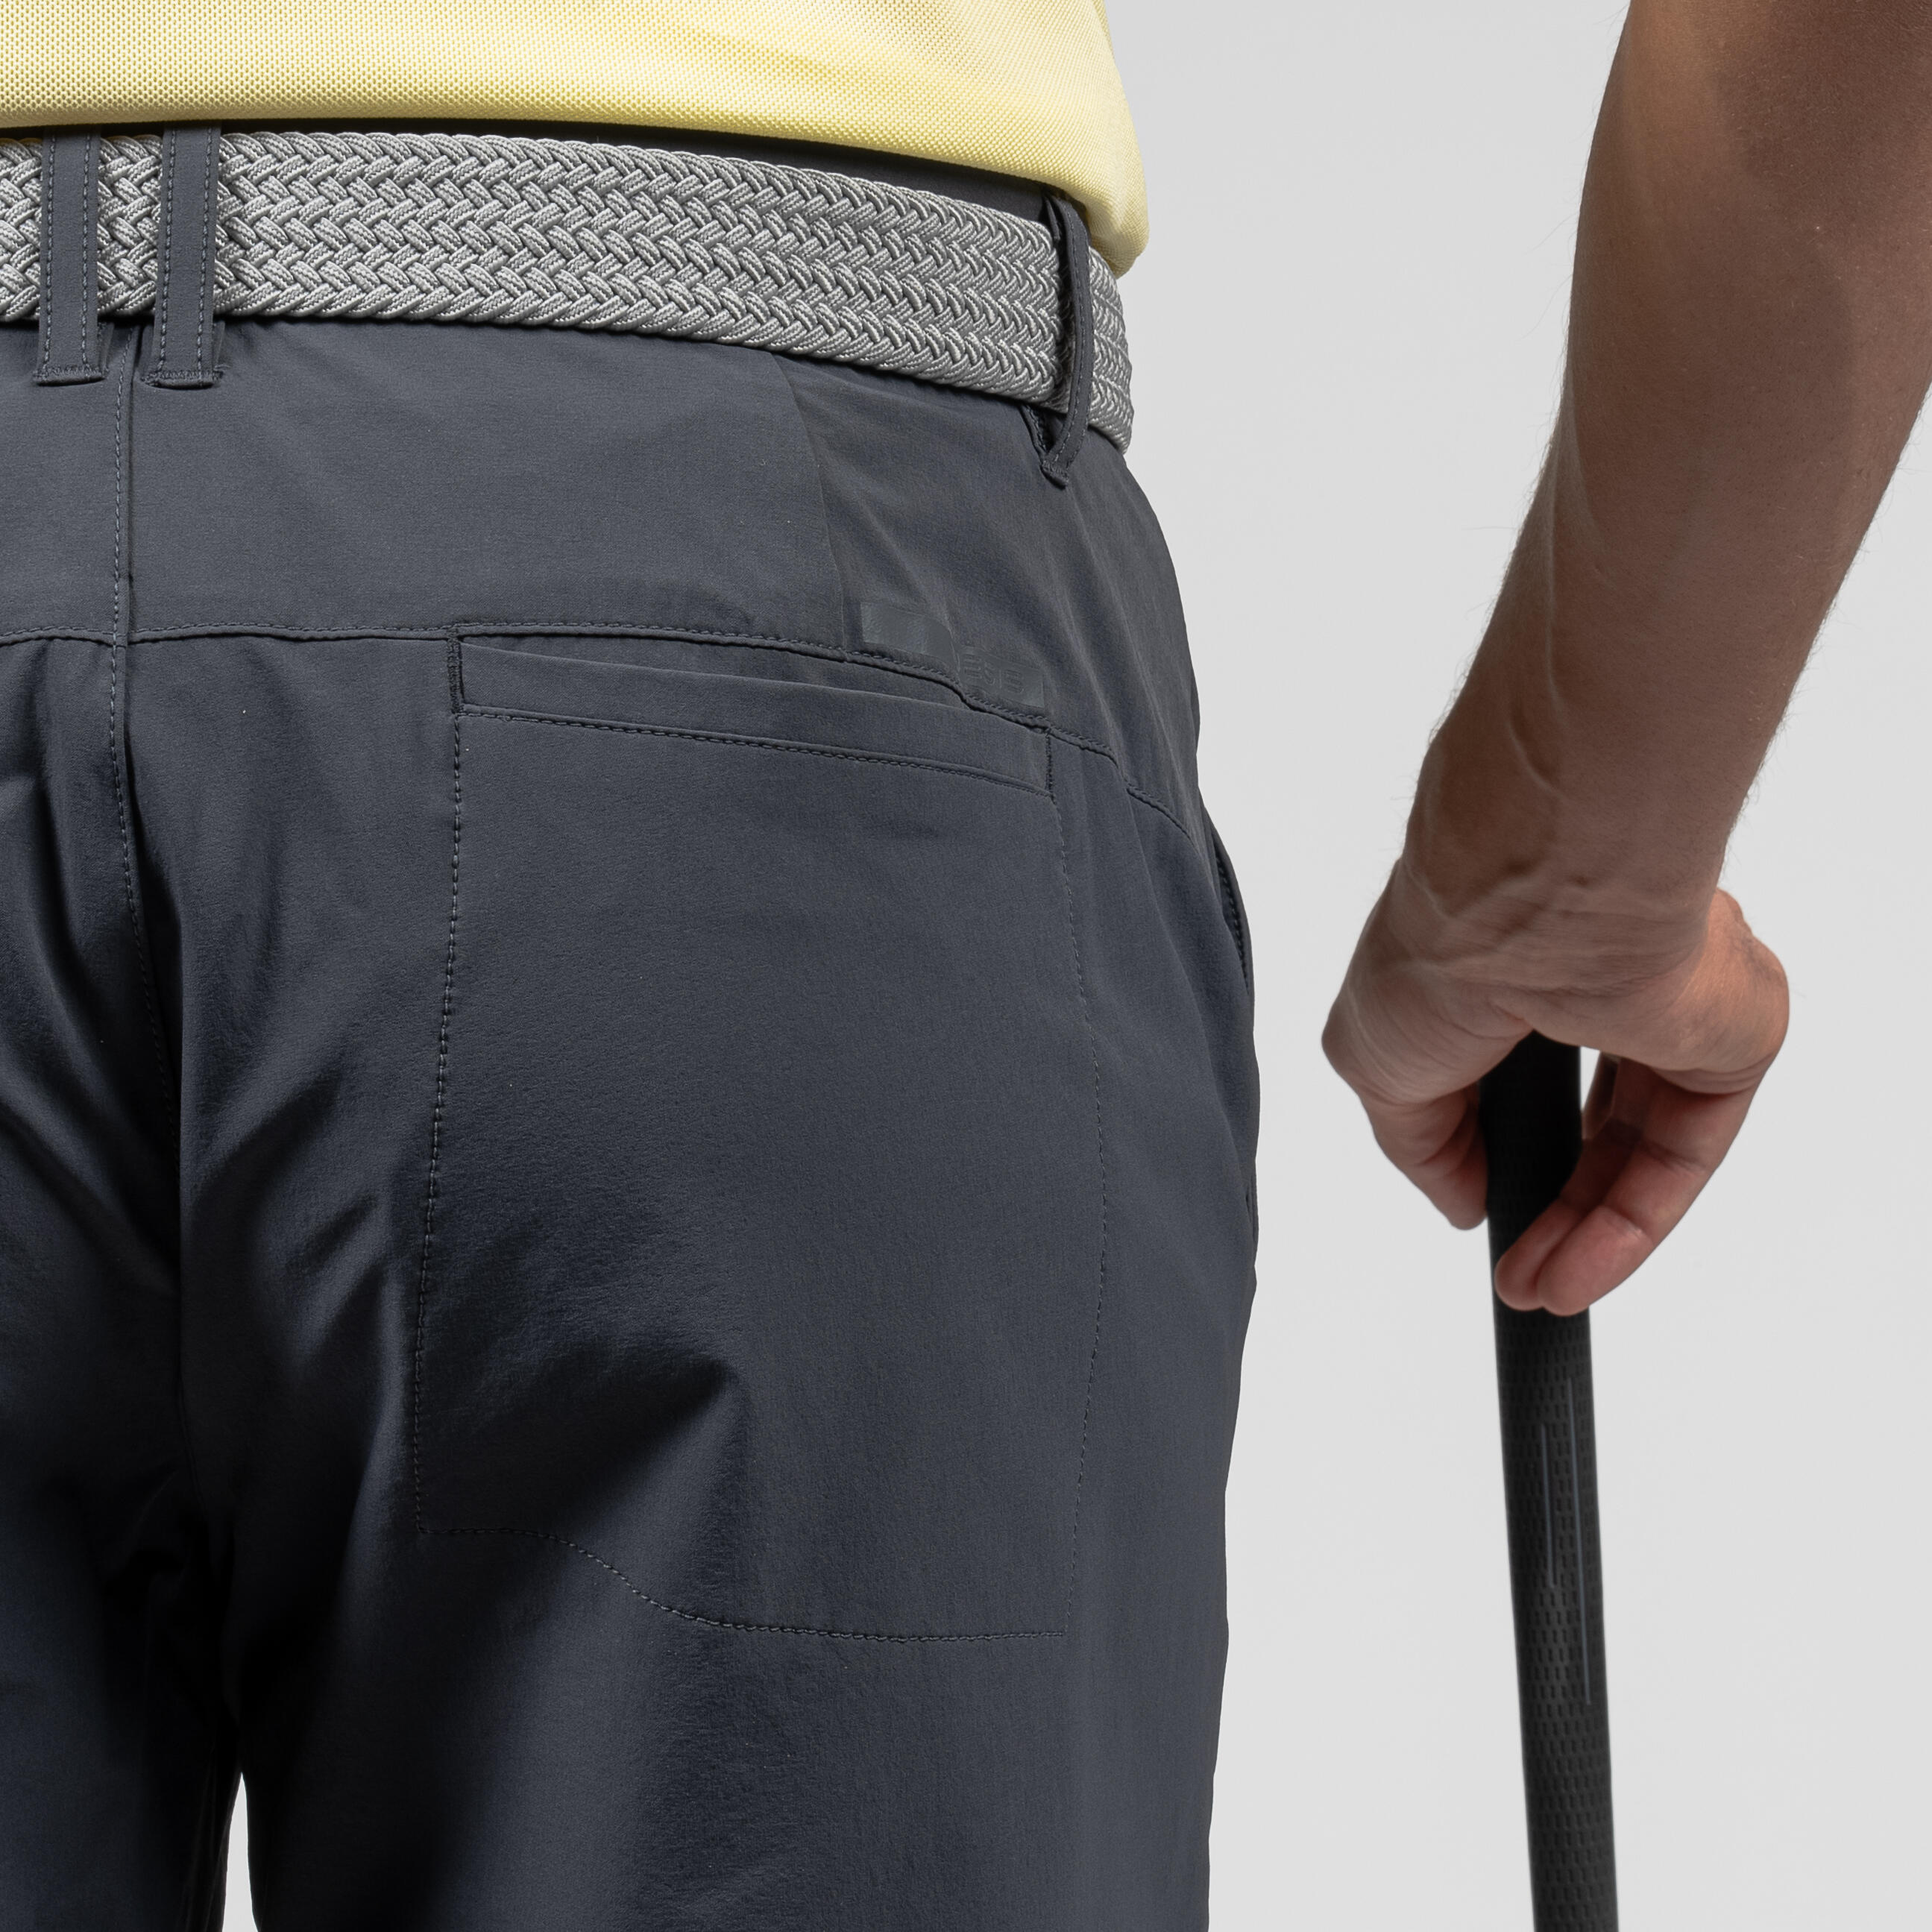 Men’s Golf Pants - WW 500 Grey